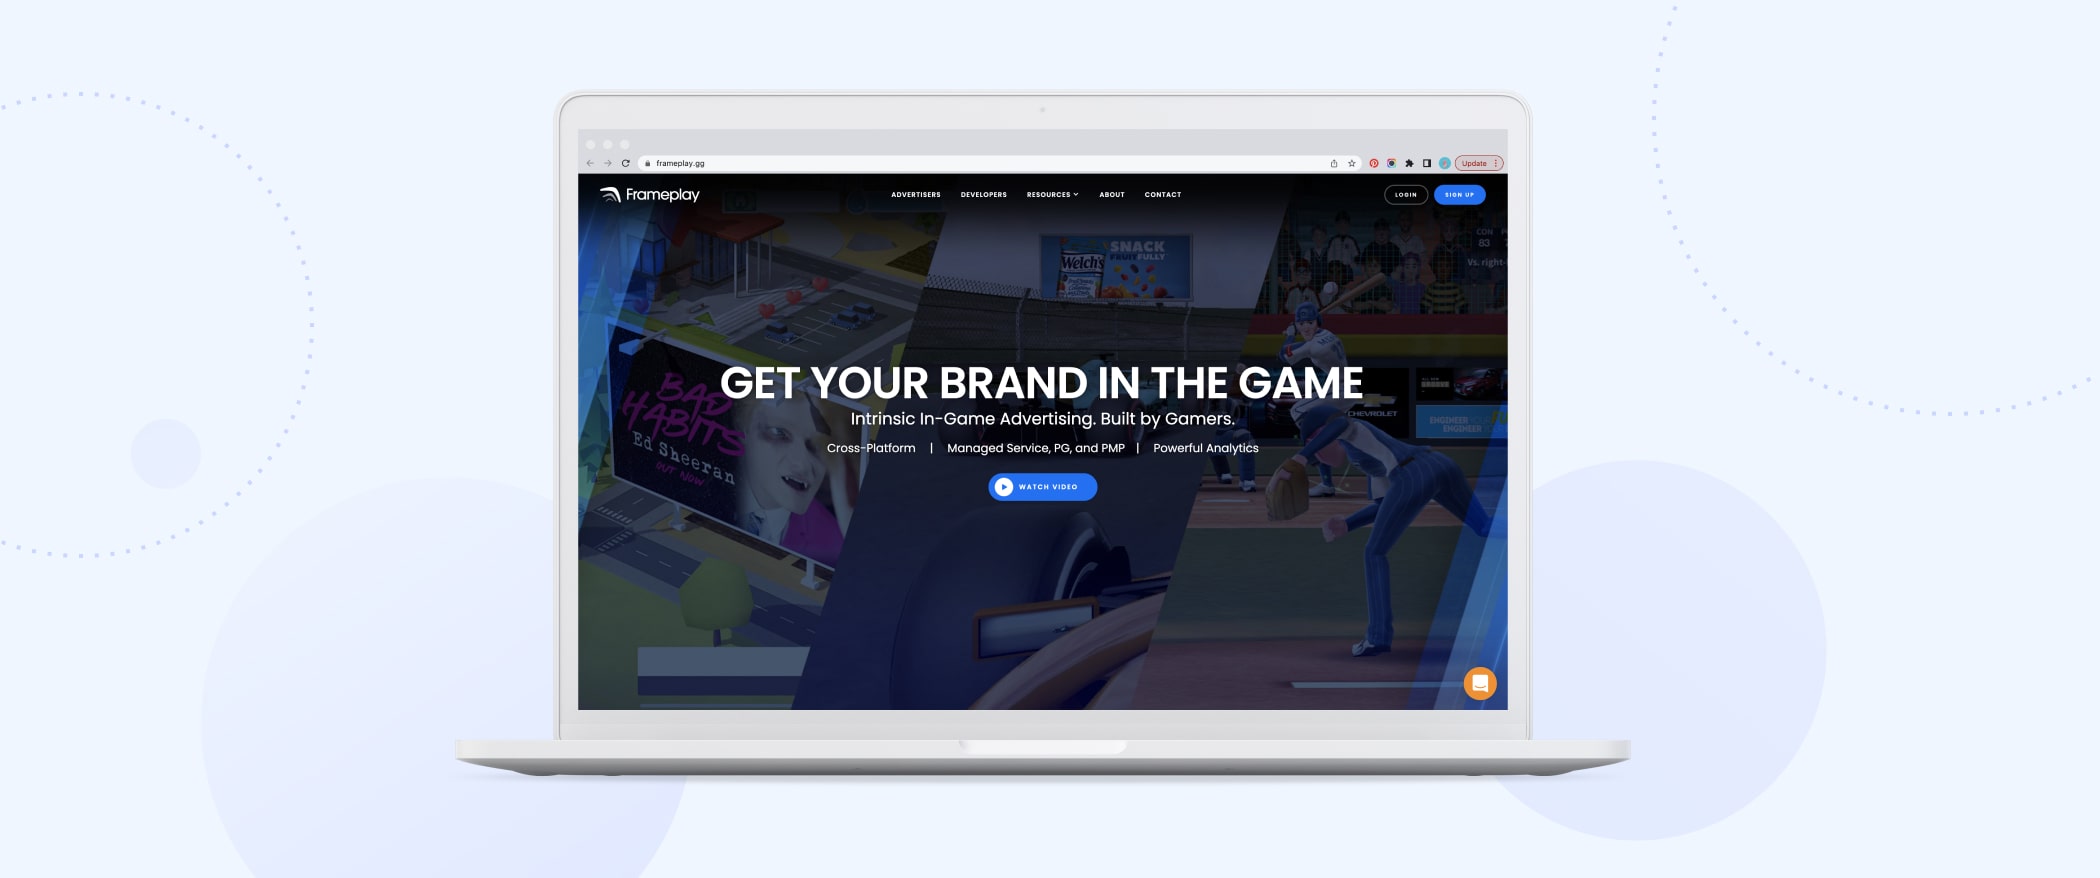 Frameplay in-game advertising company - Xenoss blog